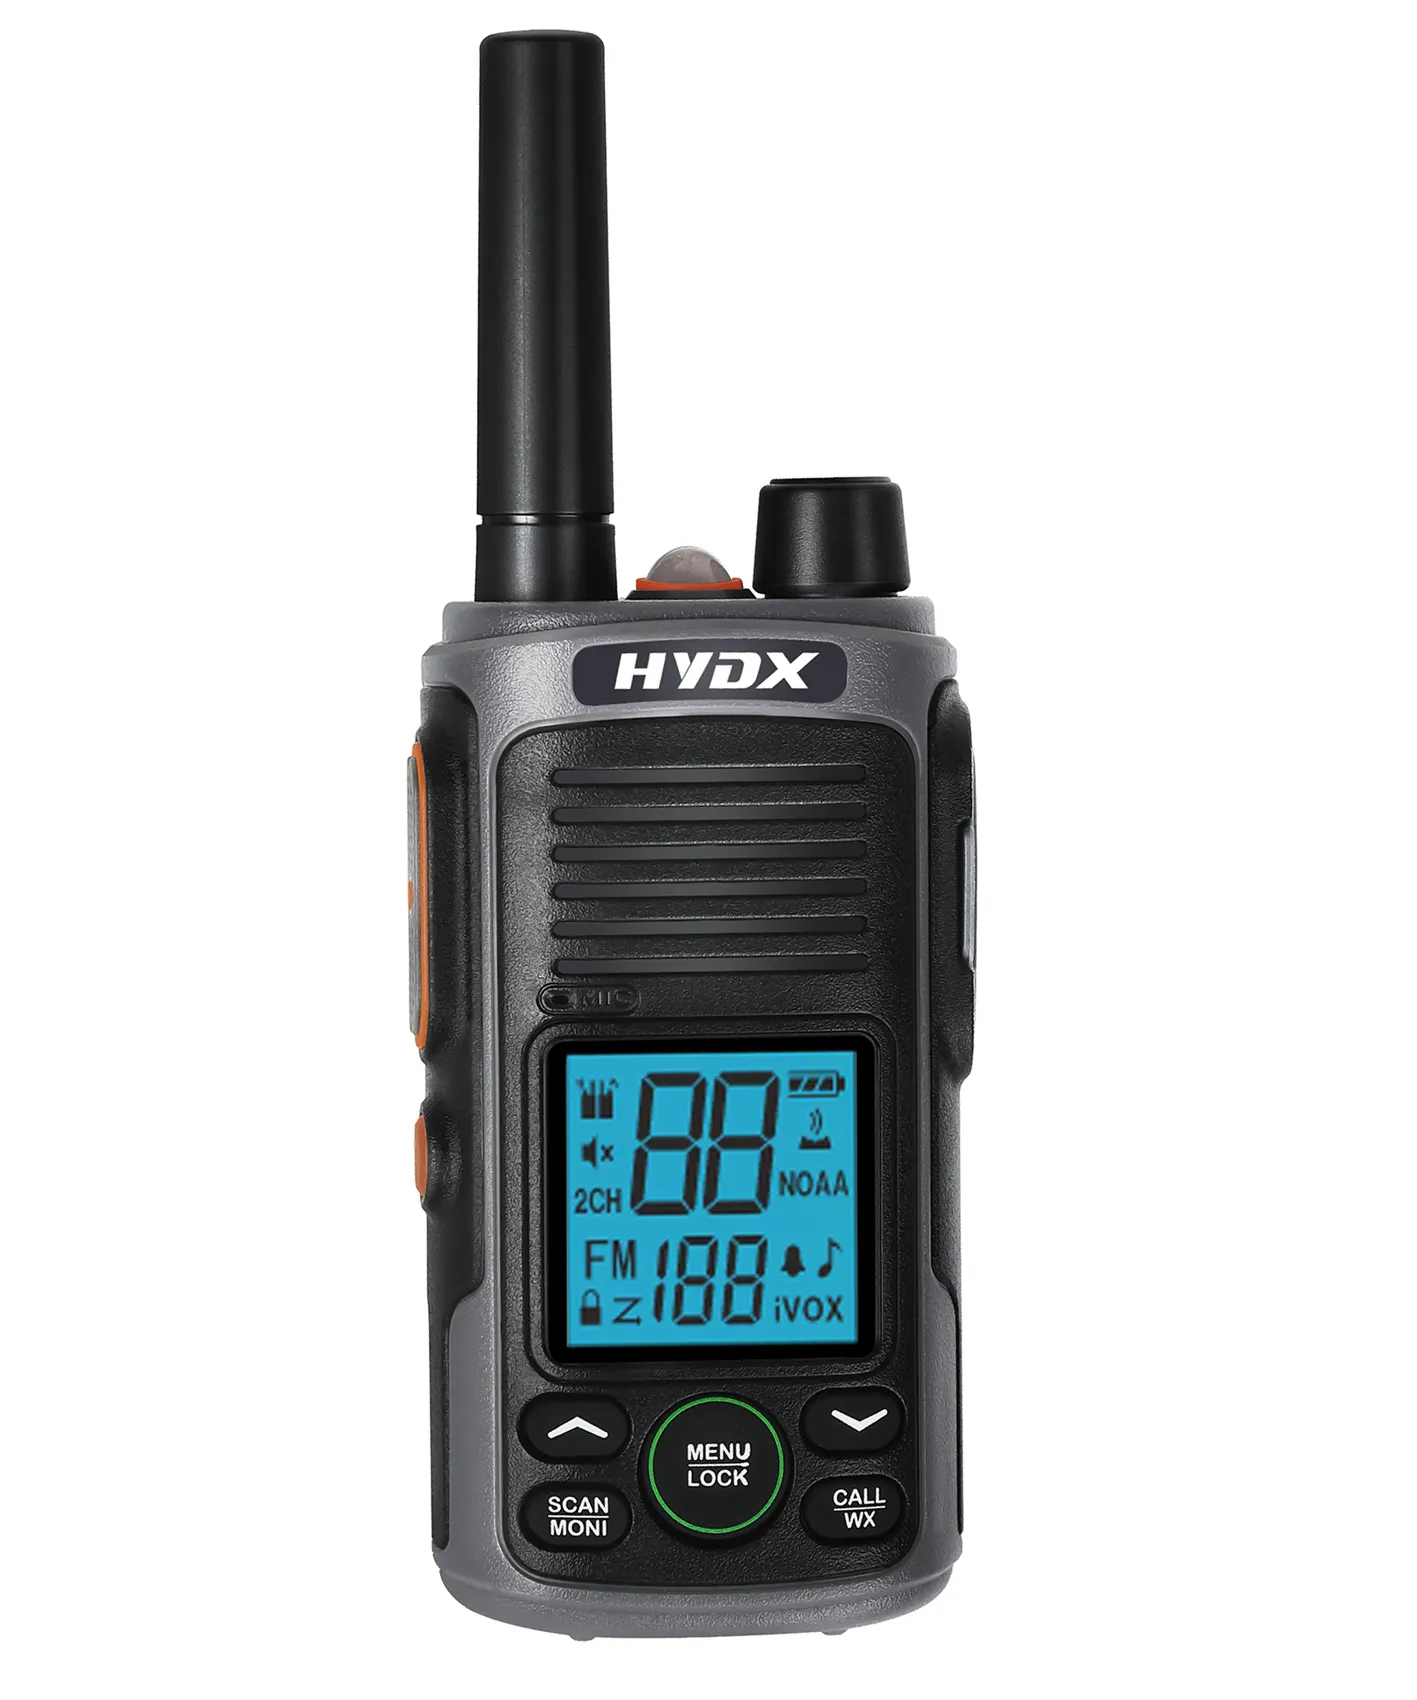 HYDX A210 UHF PMR446 NOAA 32 canali FM portatile ricaricabile 1500mAh radio bidirezionale Mini Talkie-Walkie